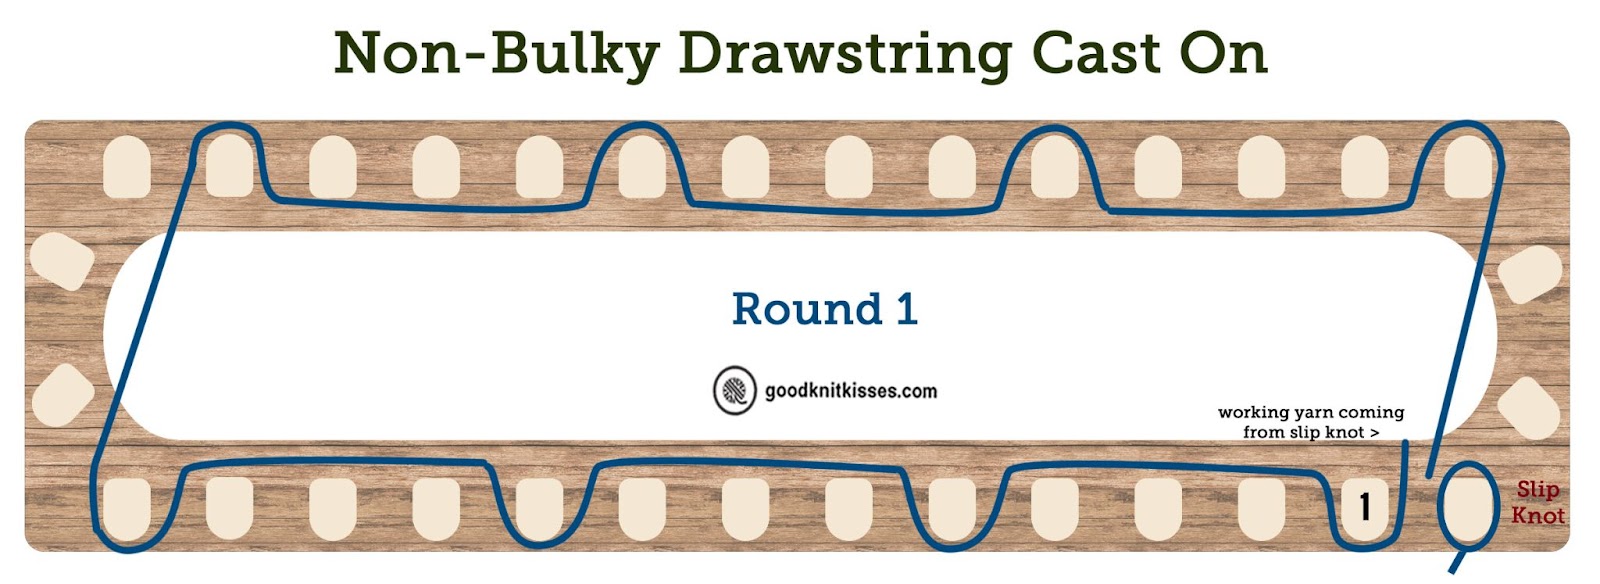 non-bulky drawstring cast on round 1 diagram